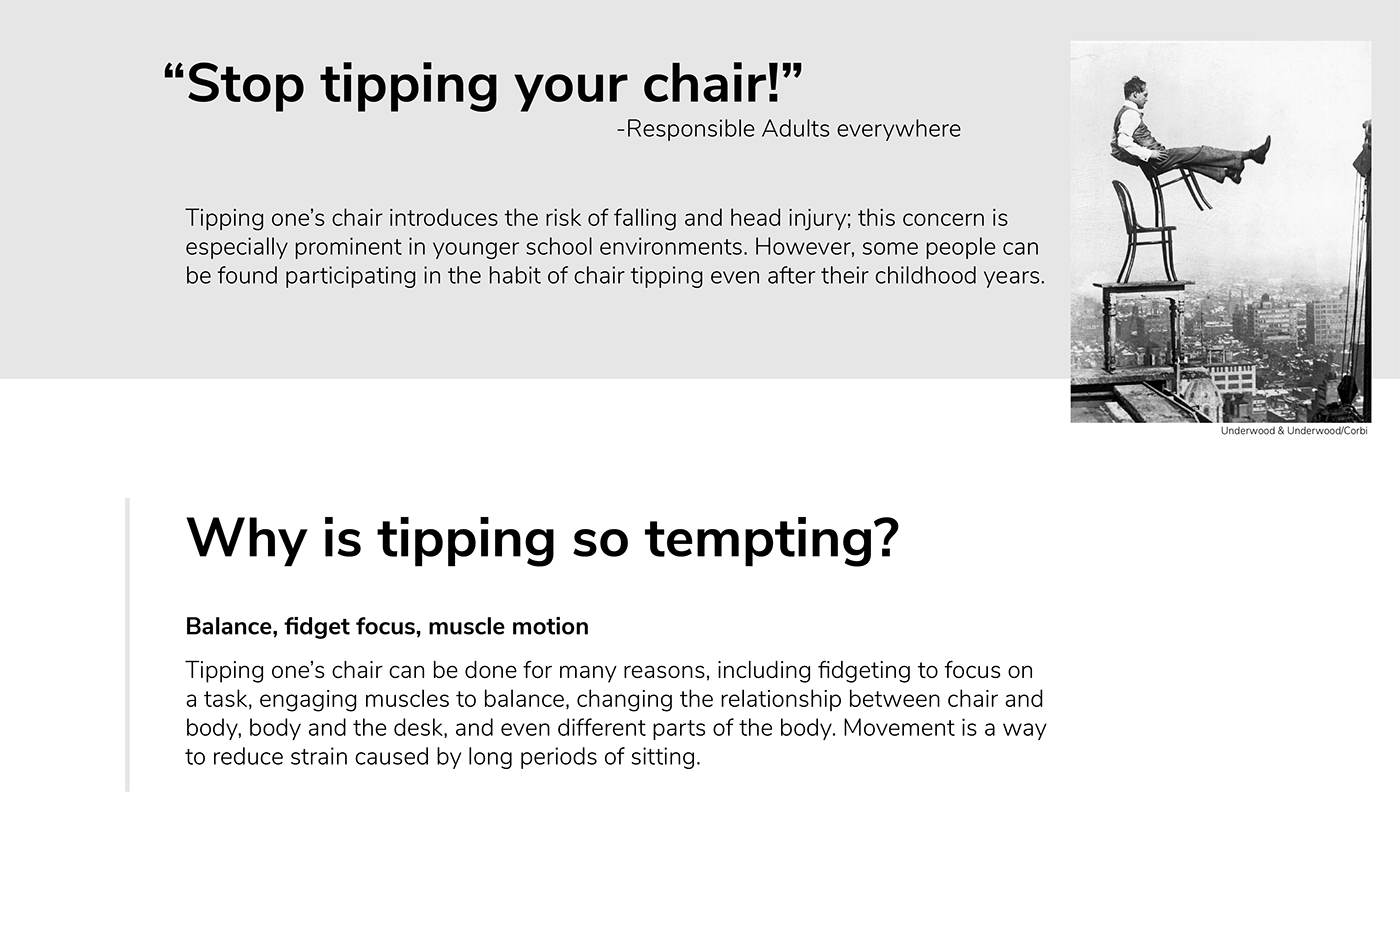 chair Tipping rocking chair fidget balance adjustable